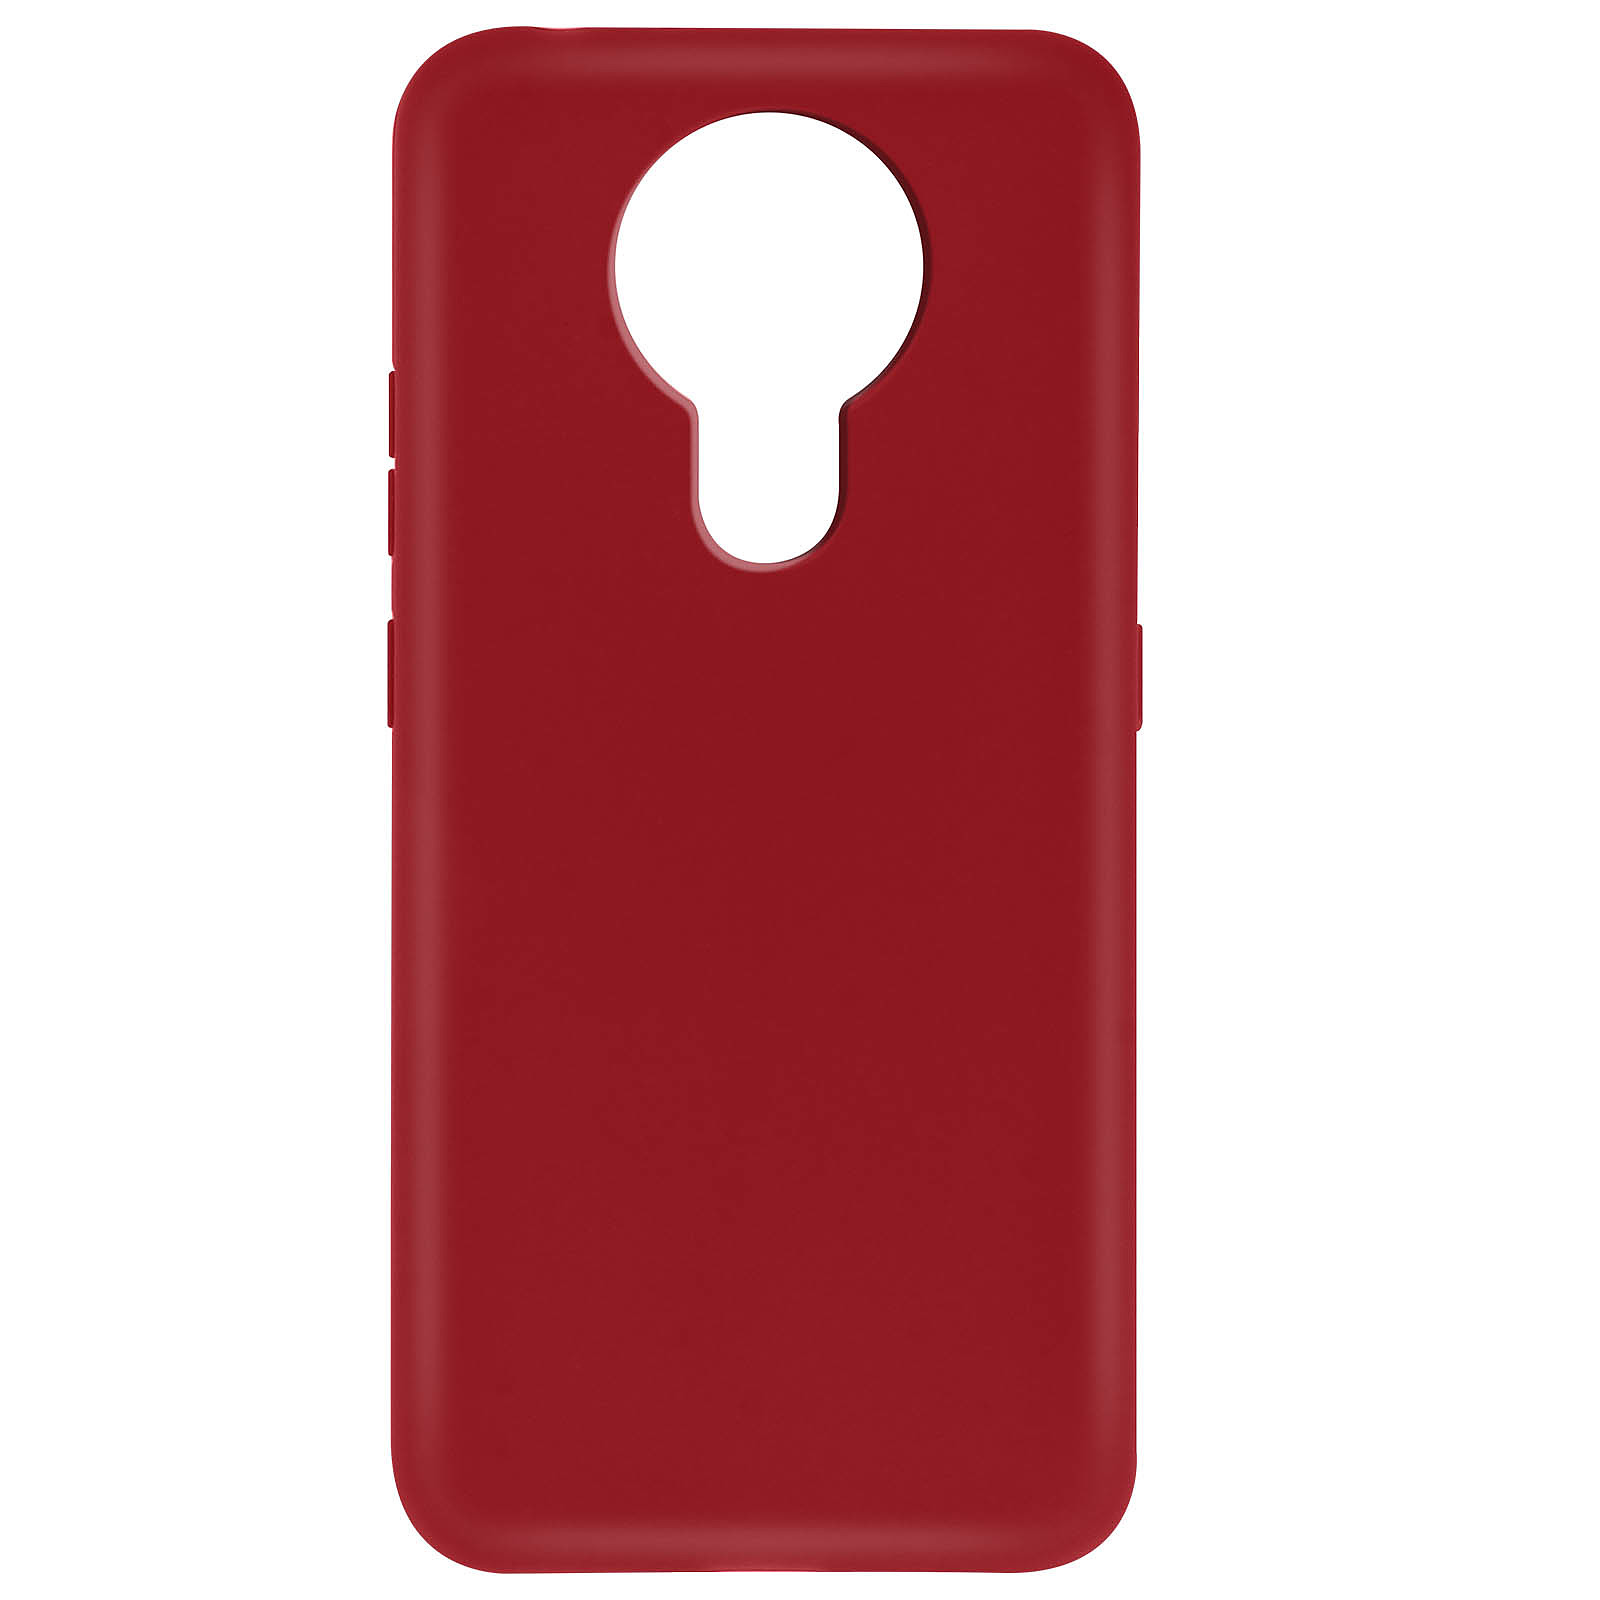 Avizar Coque pour Nokia 3.4 Flexible Antichoc Finition Mat Anti-traces Rouge - Coque telephone Avizar